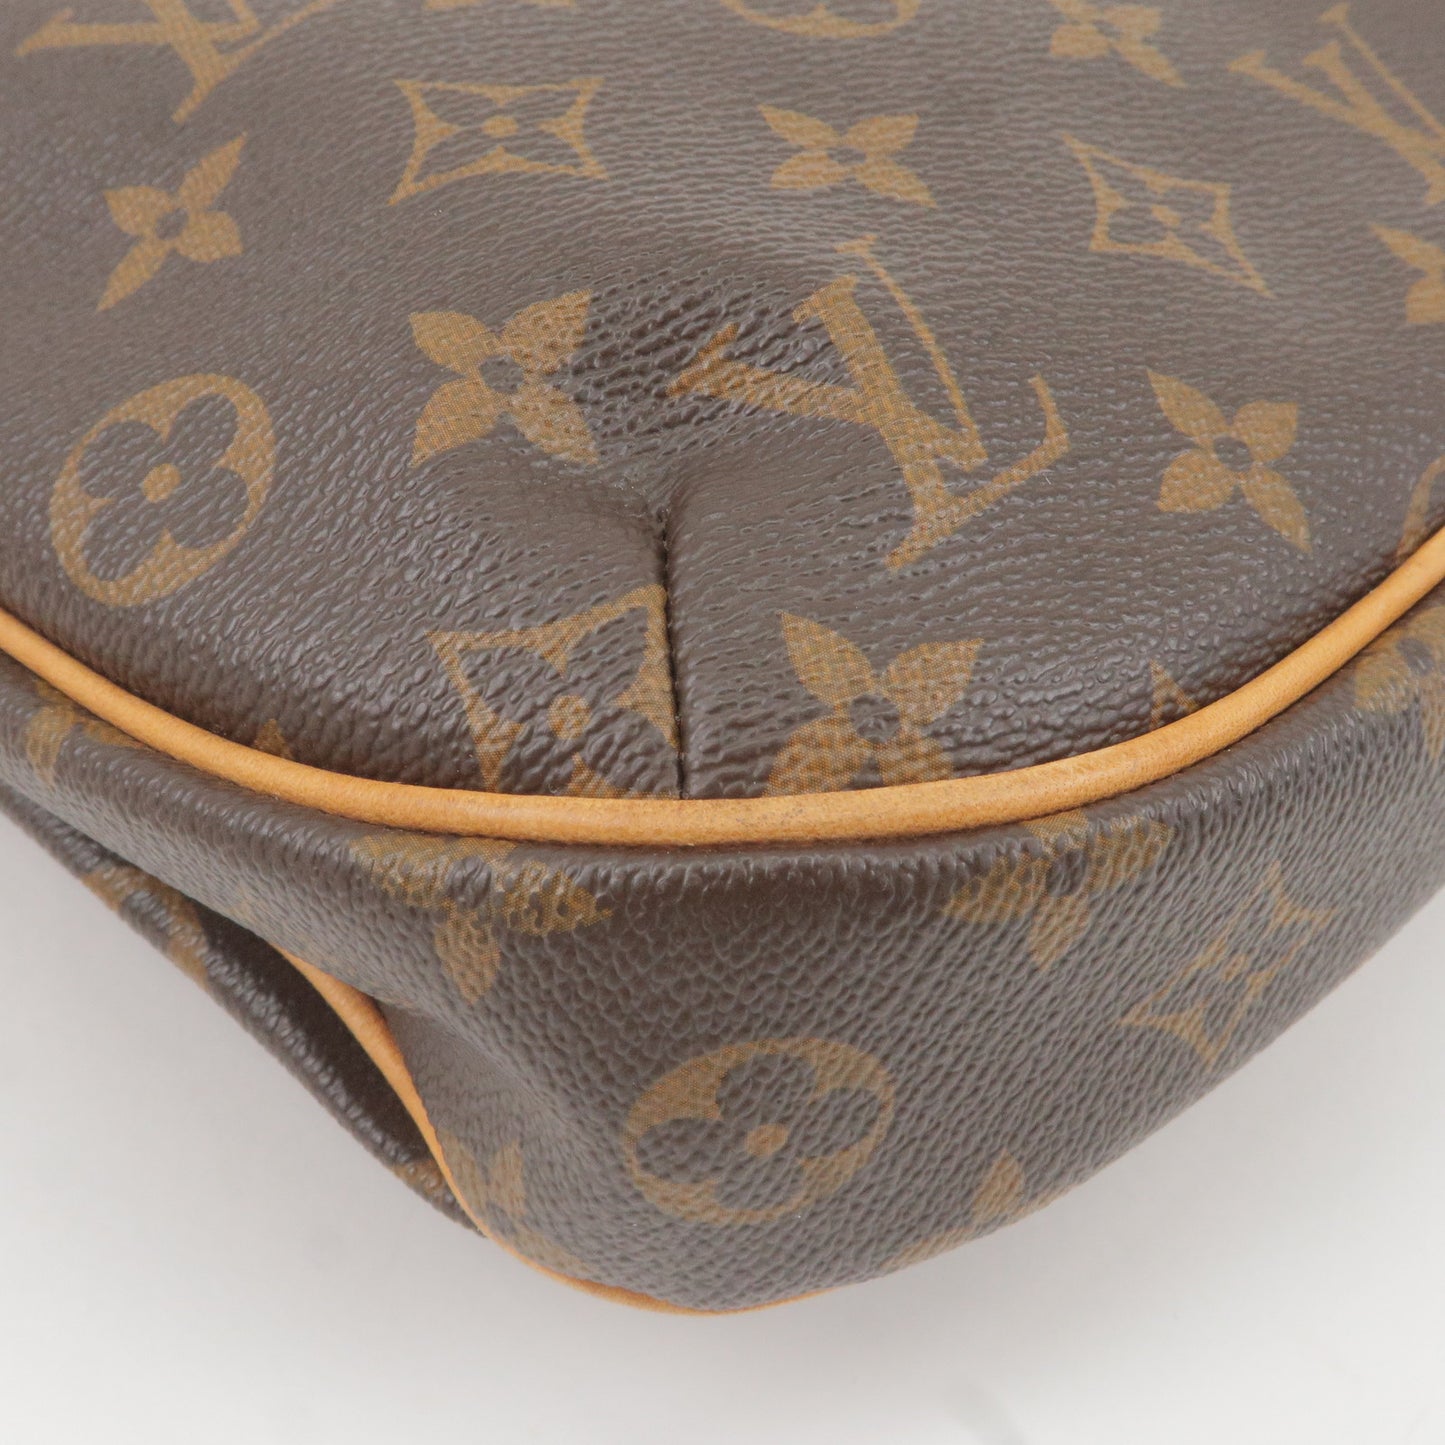 Louis Vuitton Monogram Odeon PM Shoulder Bag M56390